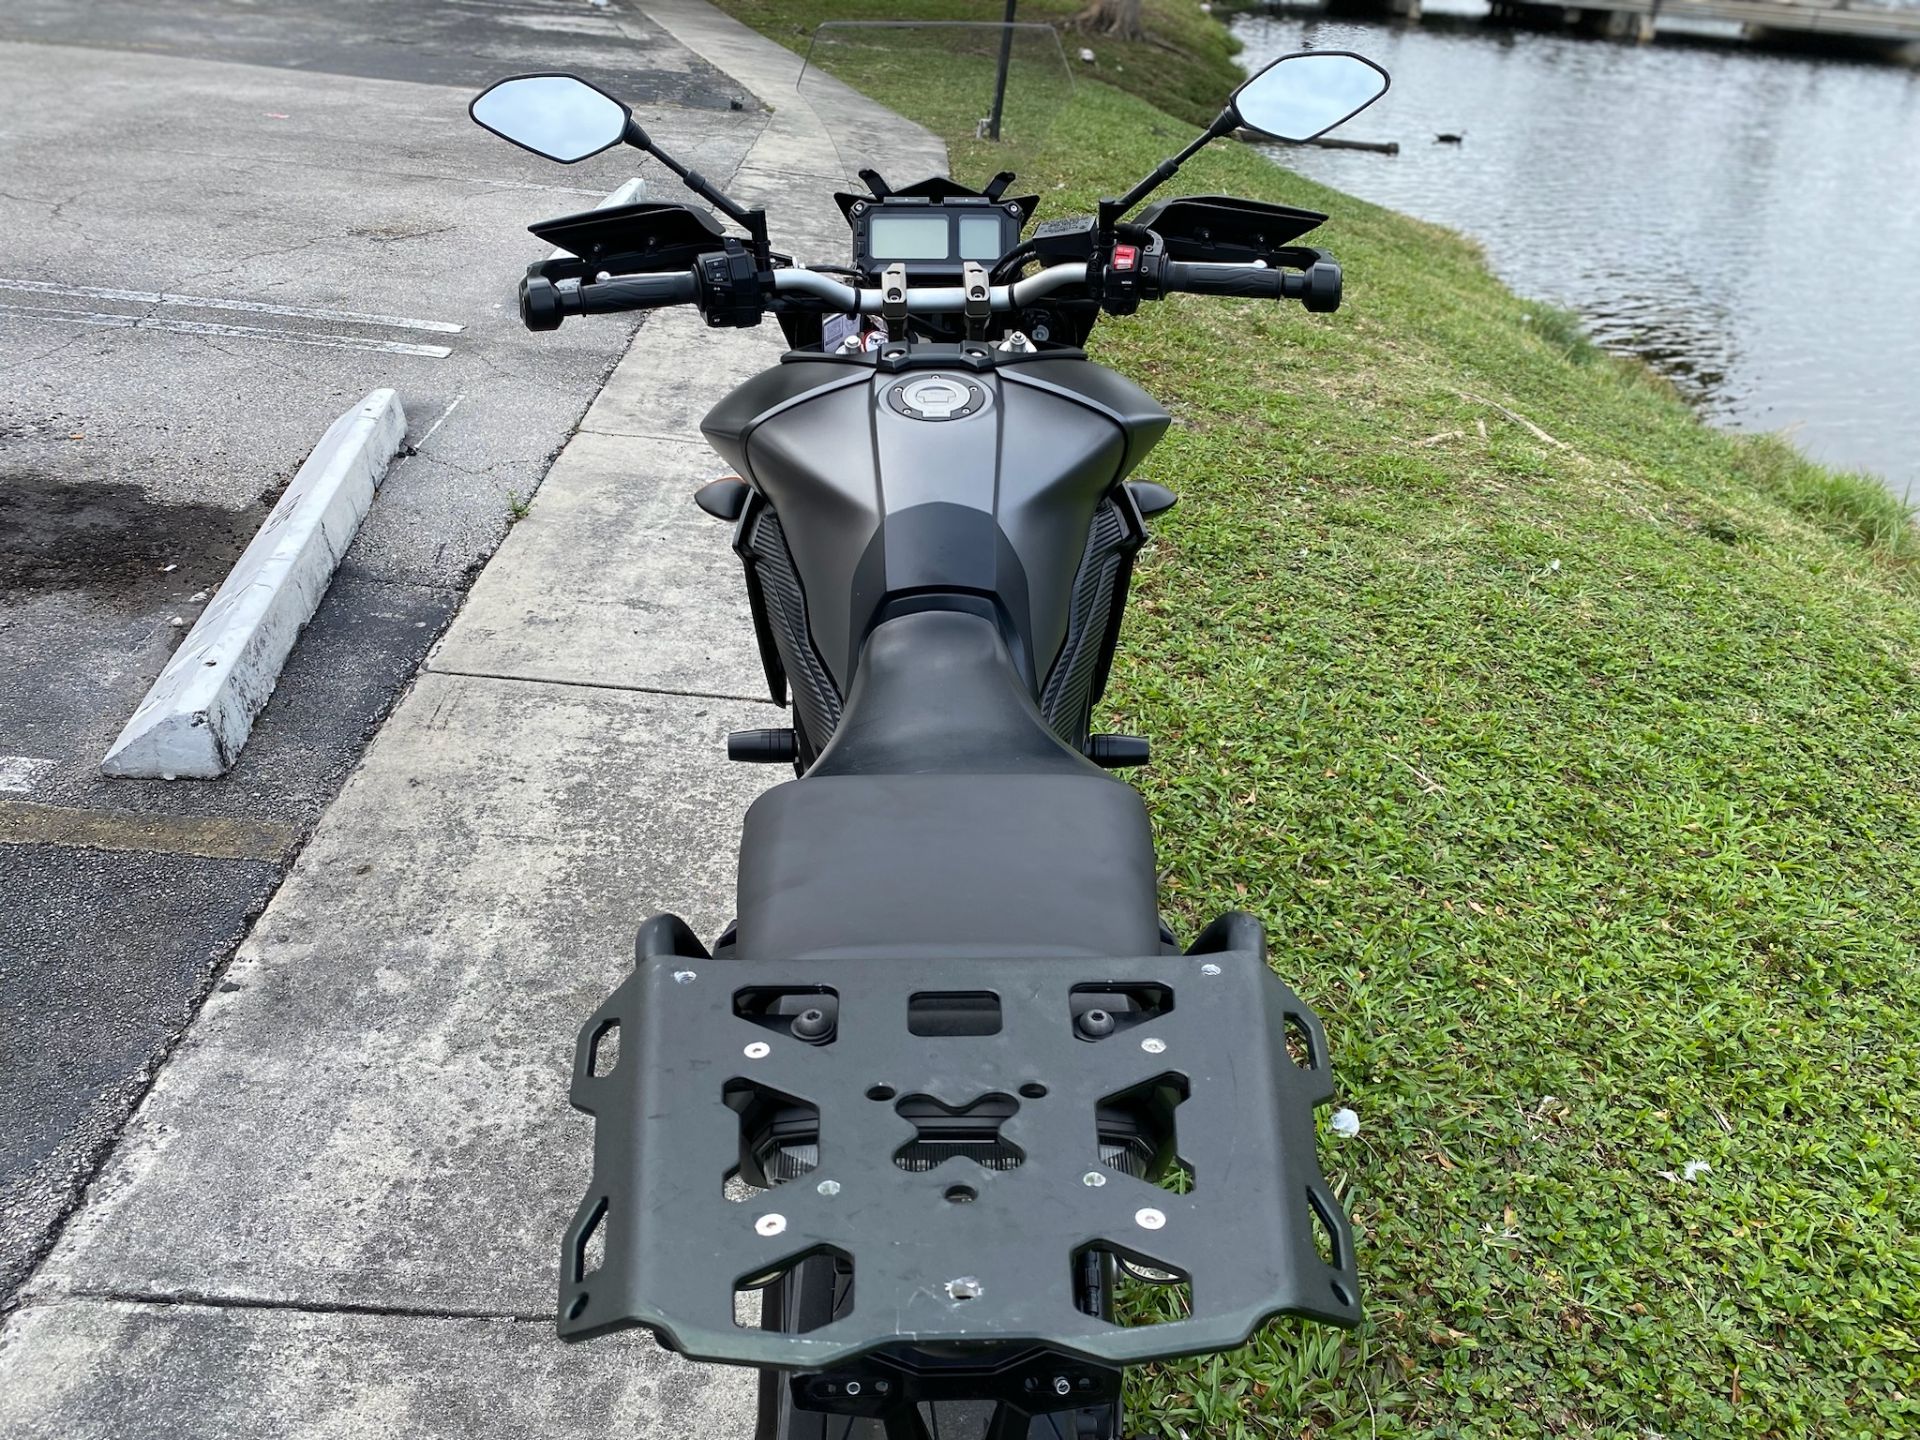 2015 Yamaha FJ-09 in North Miami Beach, Florida - Photo 11